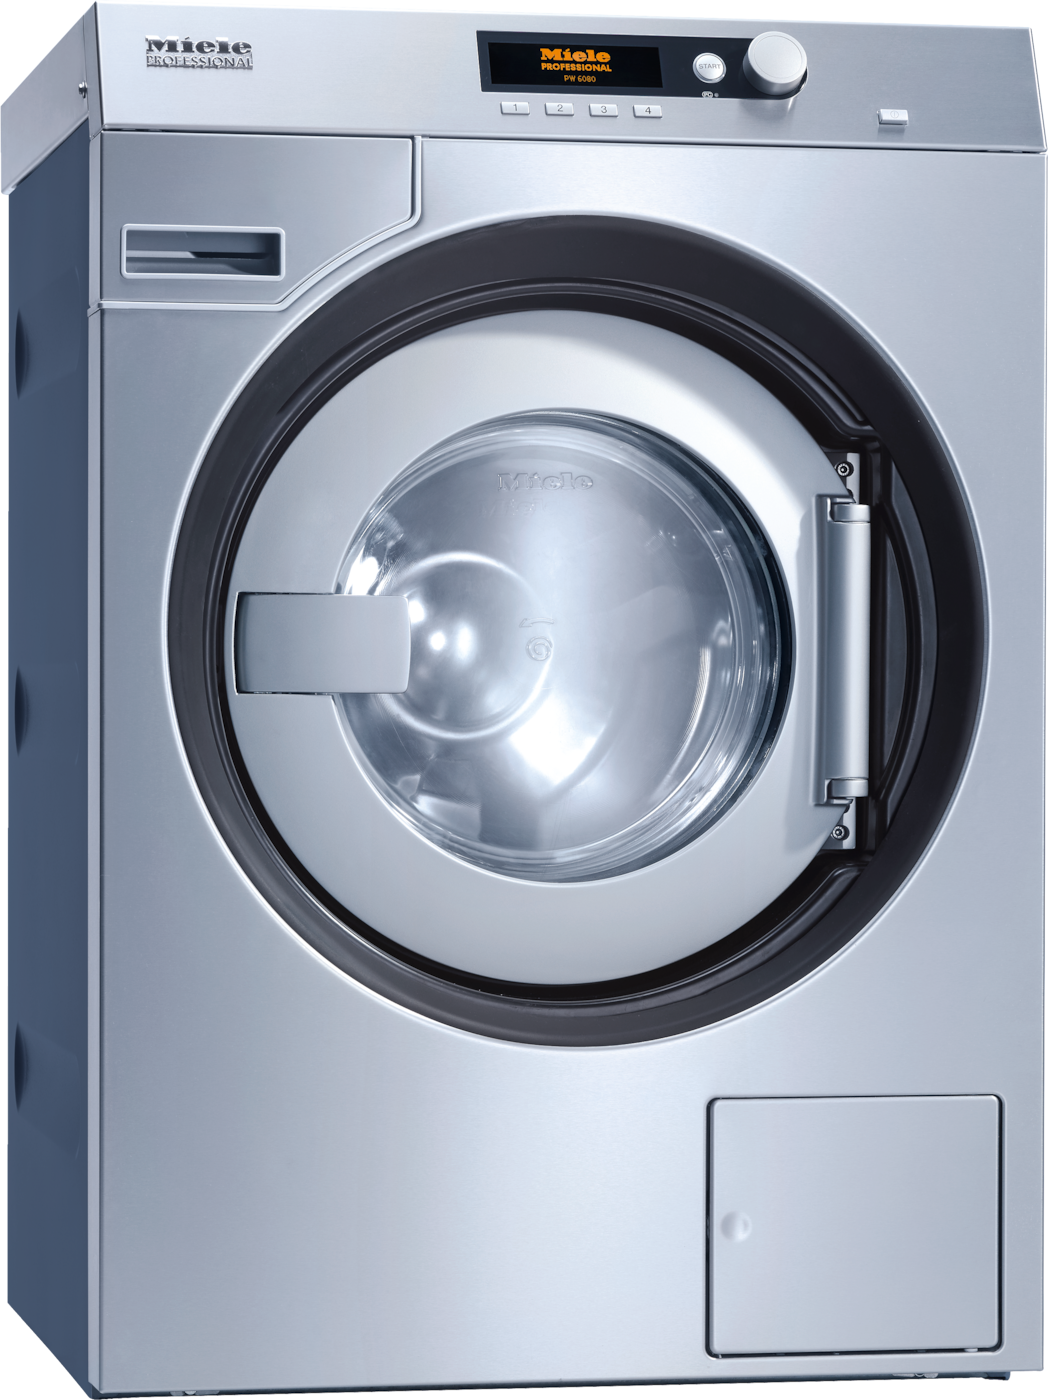 PW 6080 Vario [EL LP] - Washing machine, electrically heated 